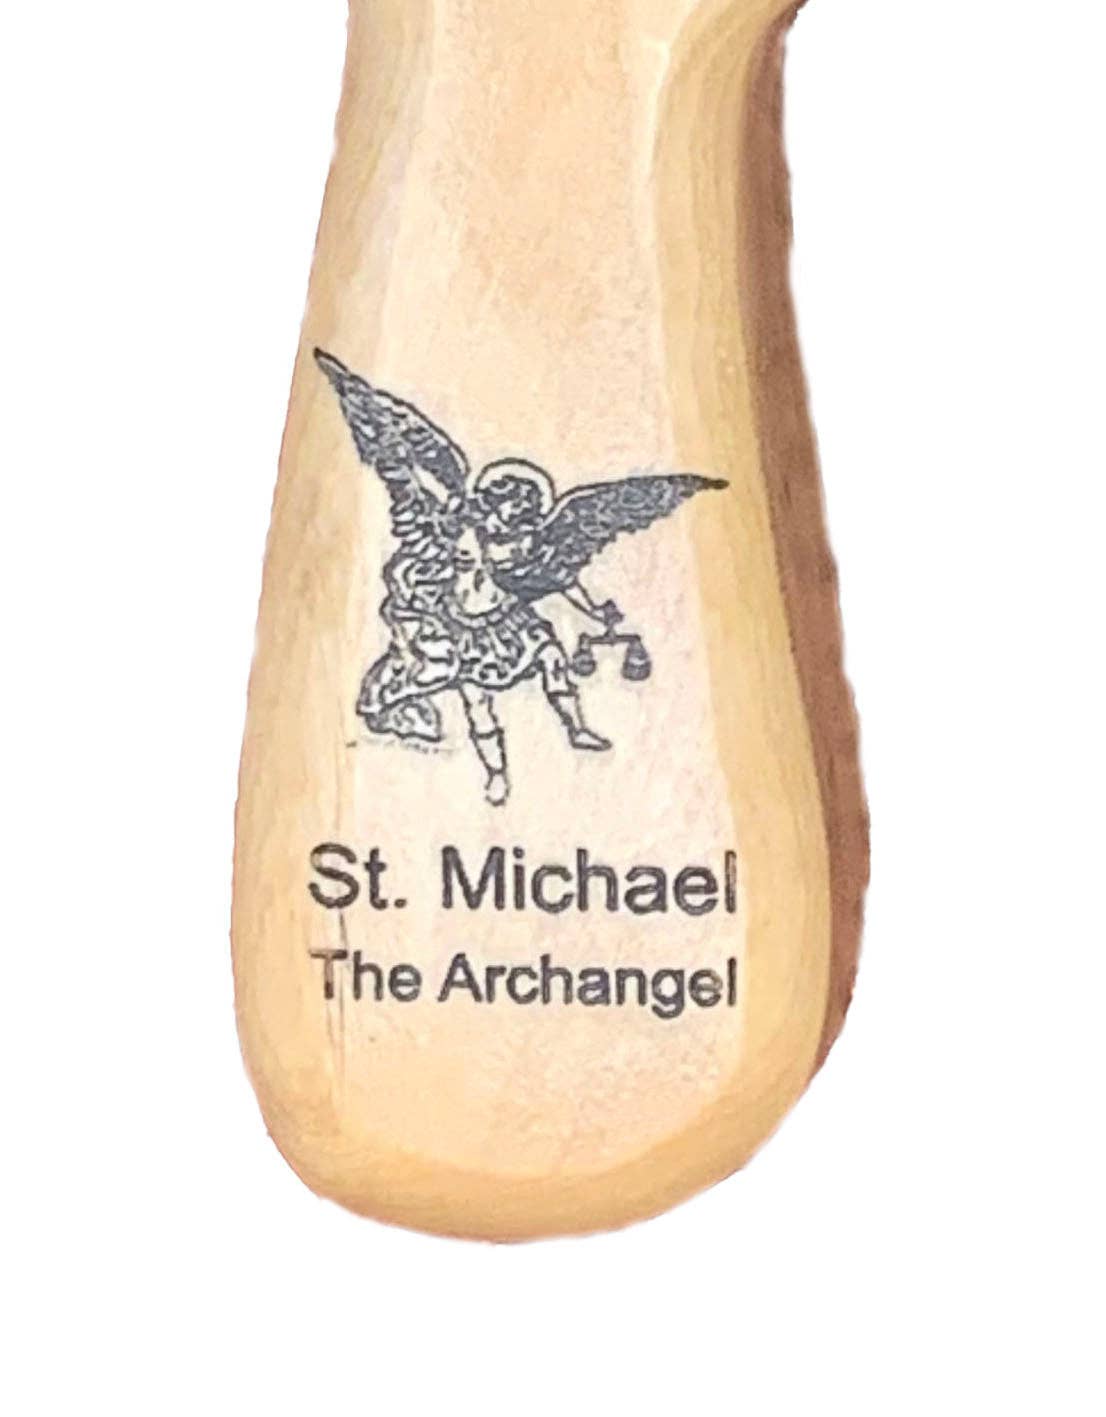 Saint Michael the Archangel - Engraved Holding Cross